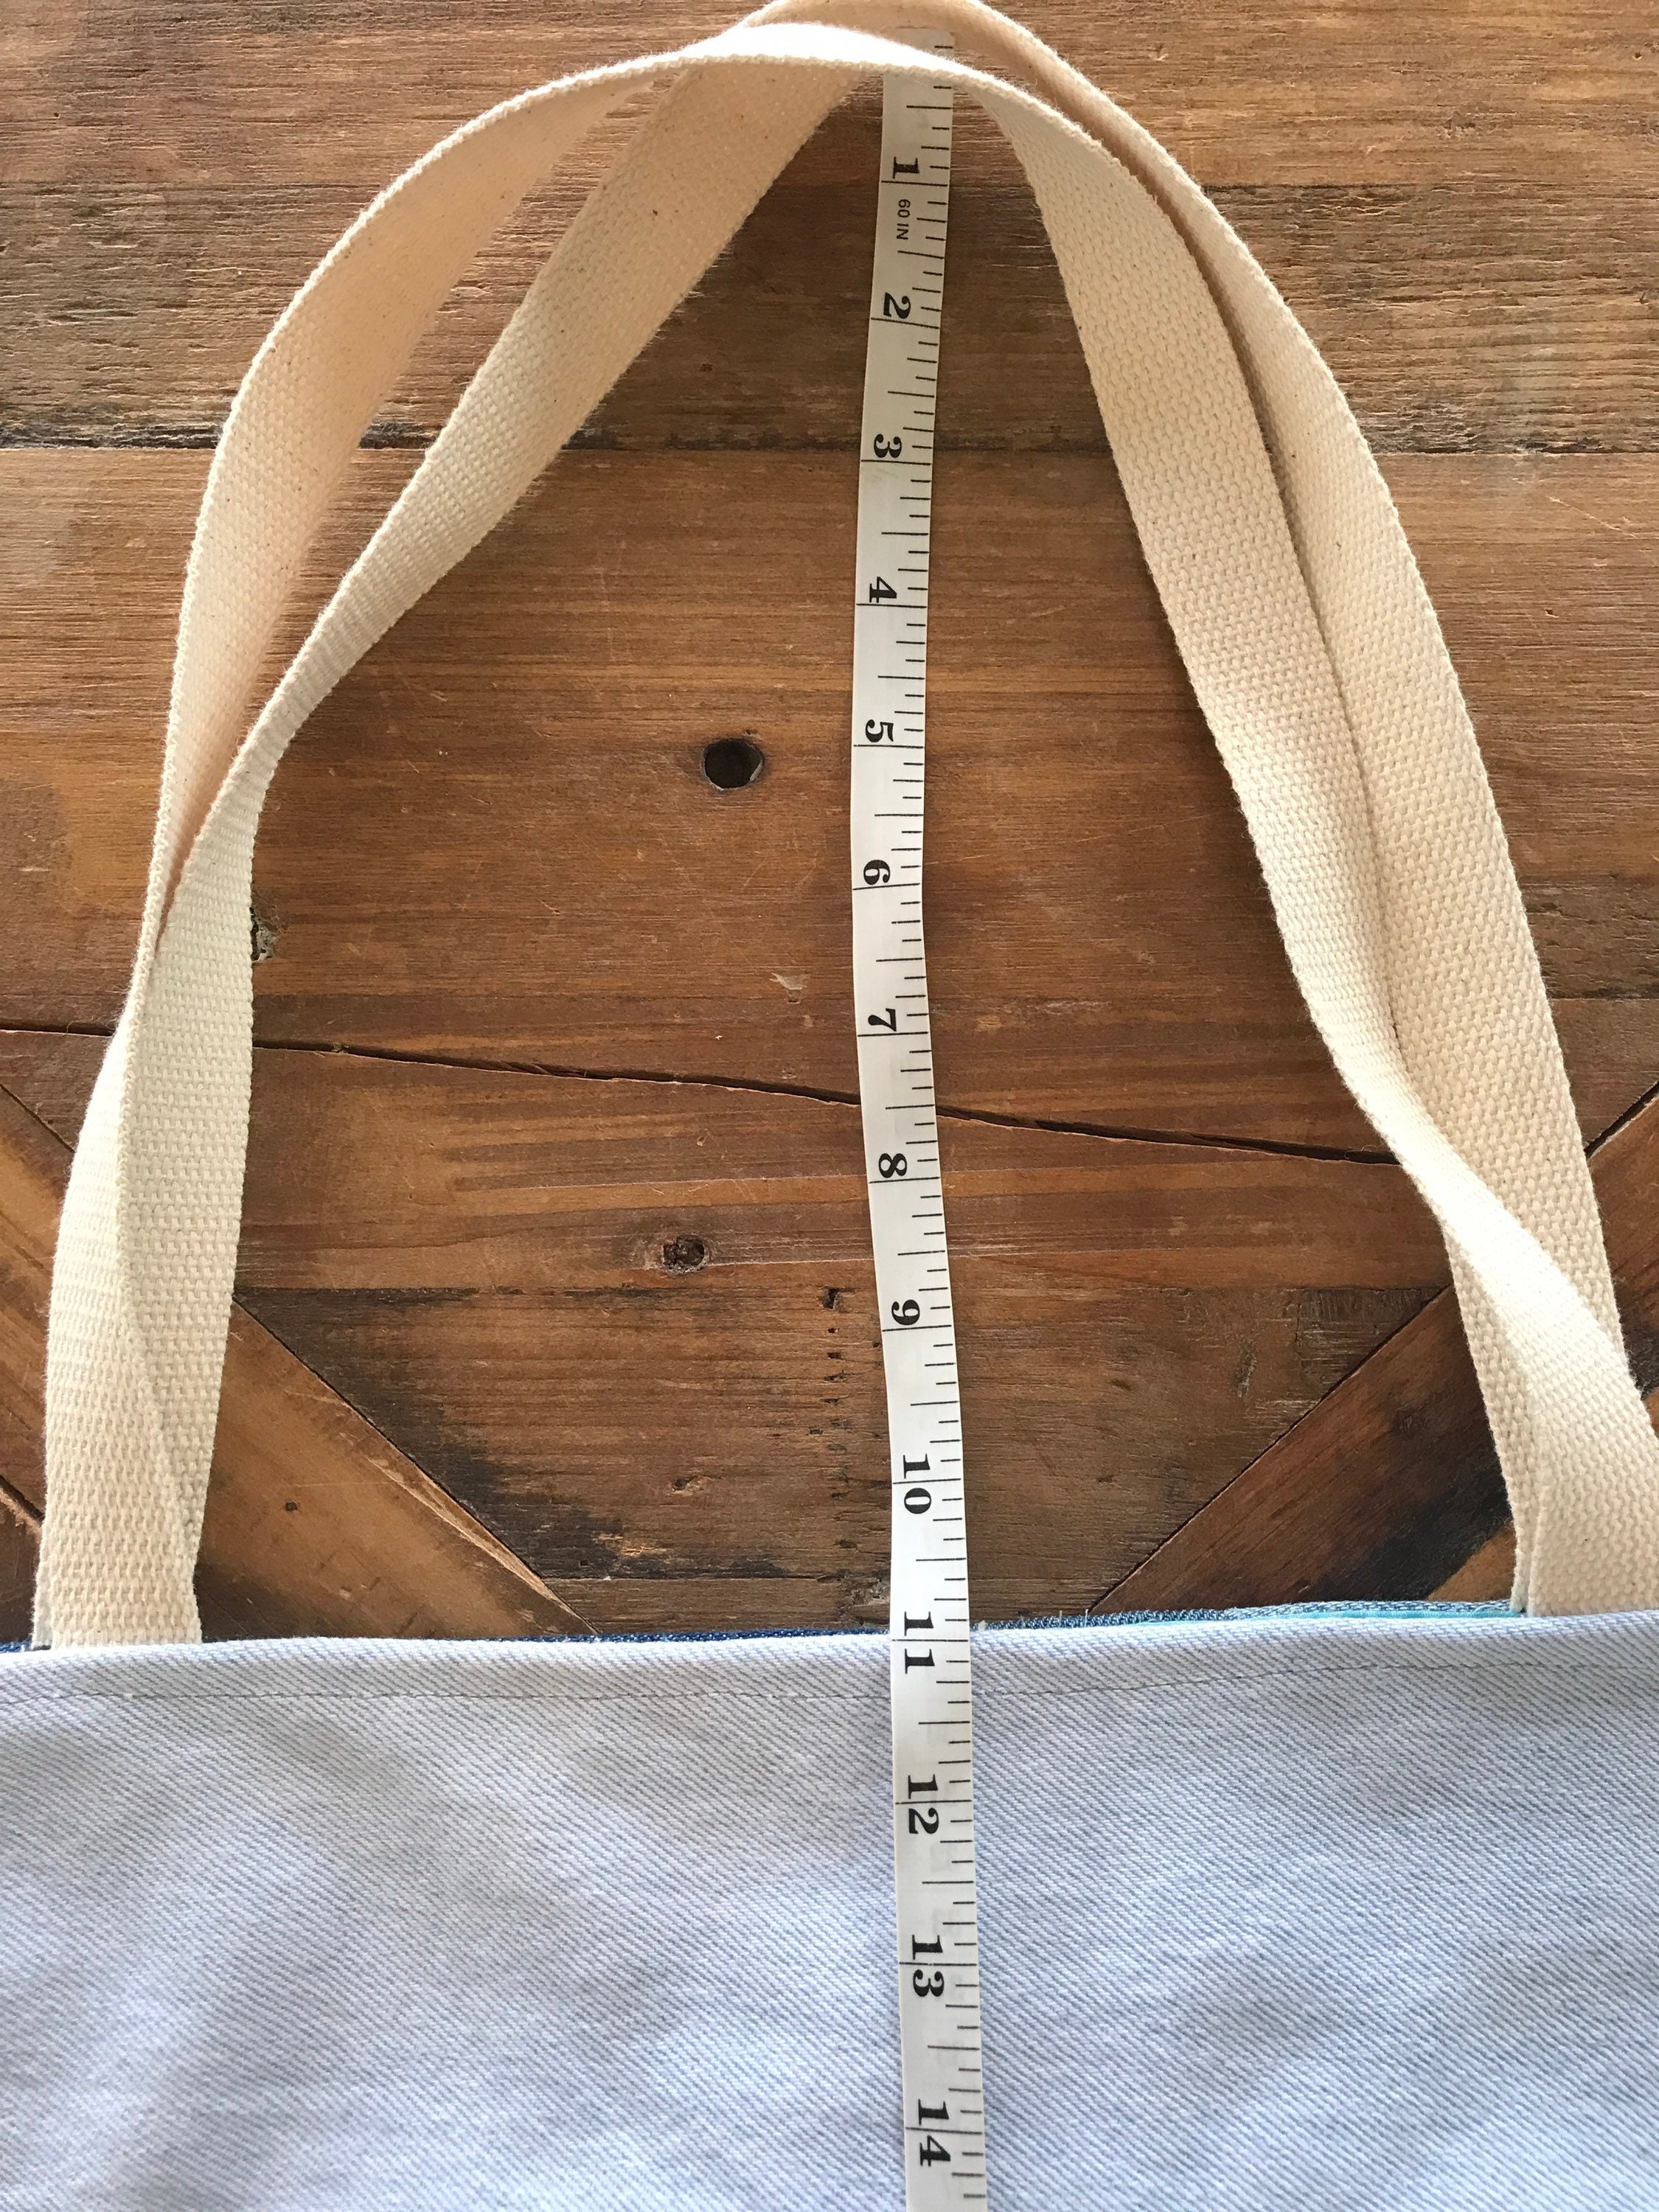 Vintage Re-Worked Patchwork Denim Bag